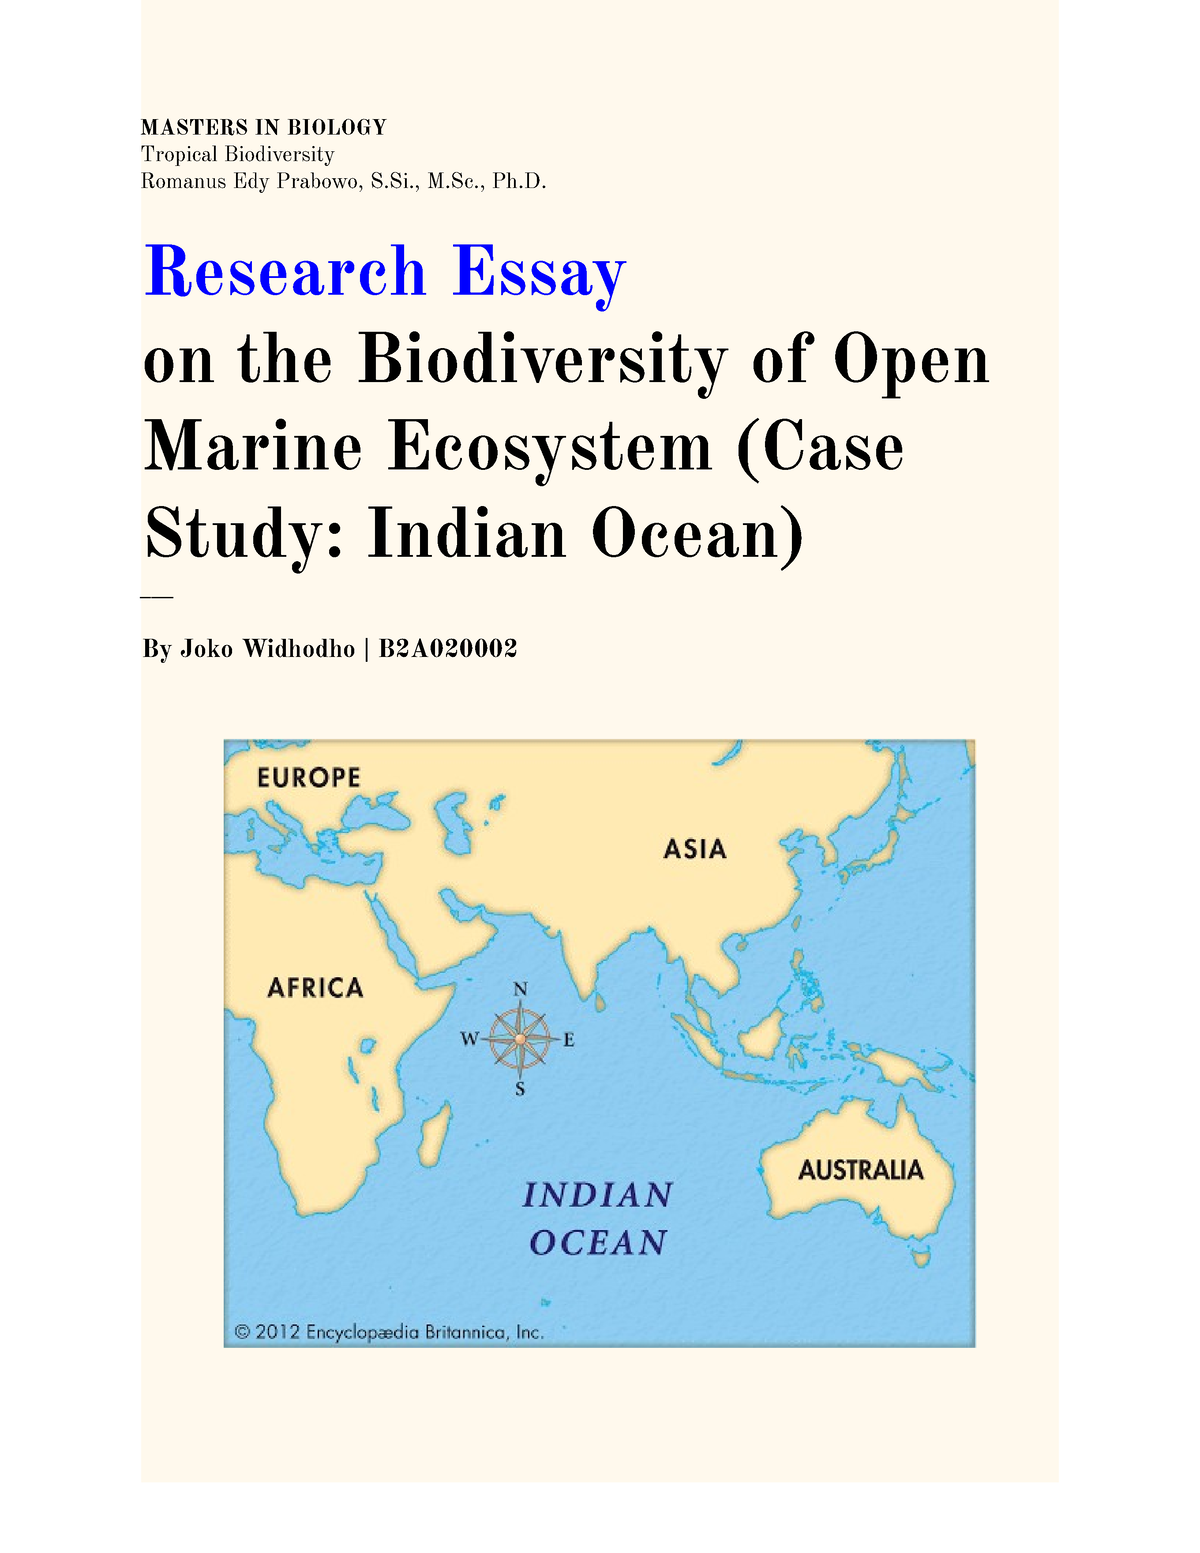 essay on marine conservation